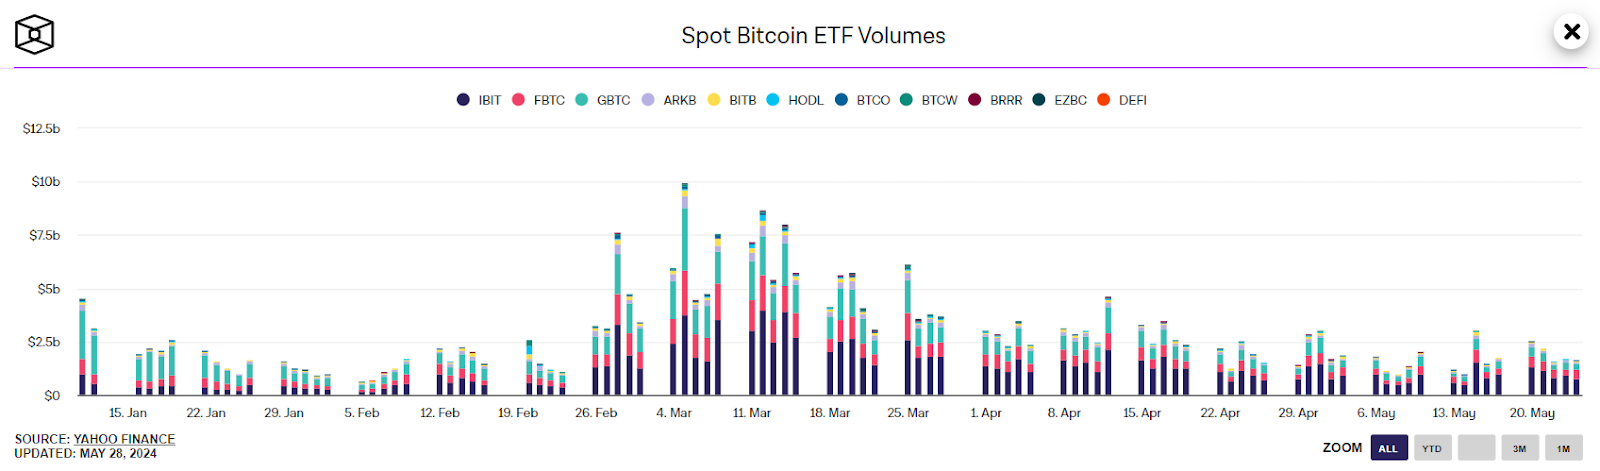 Gráfico da The Block com o volume negociado via ETF de Bitcoin spot